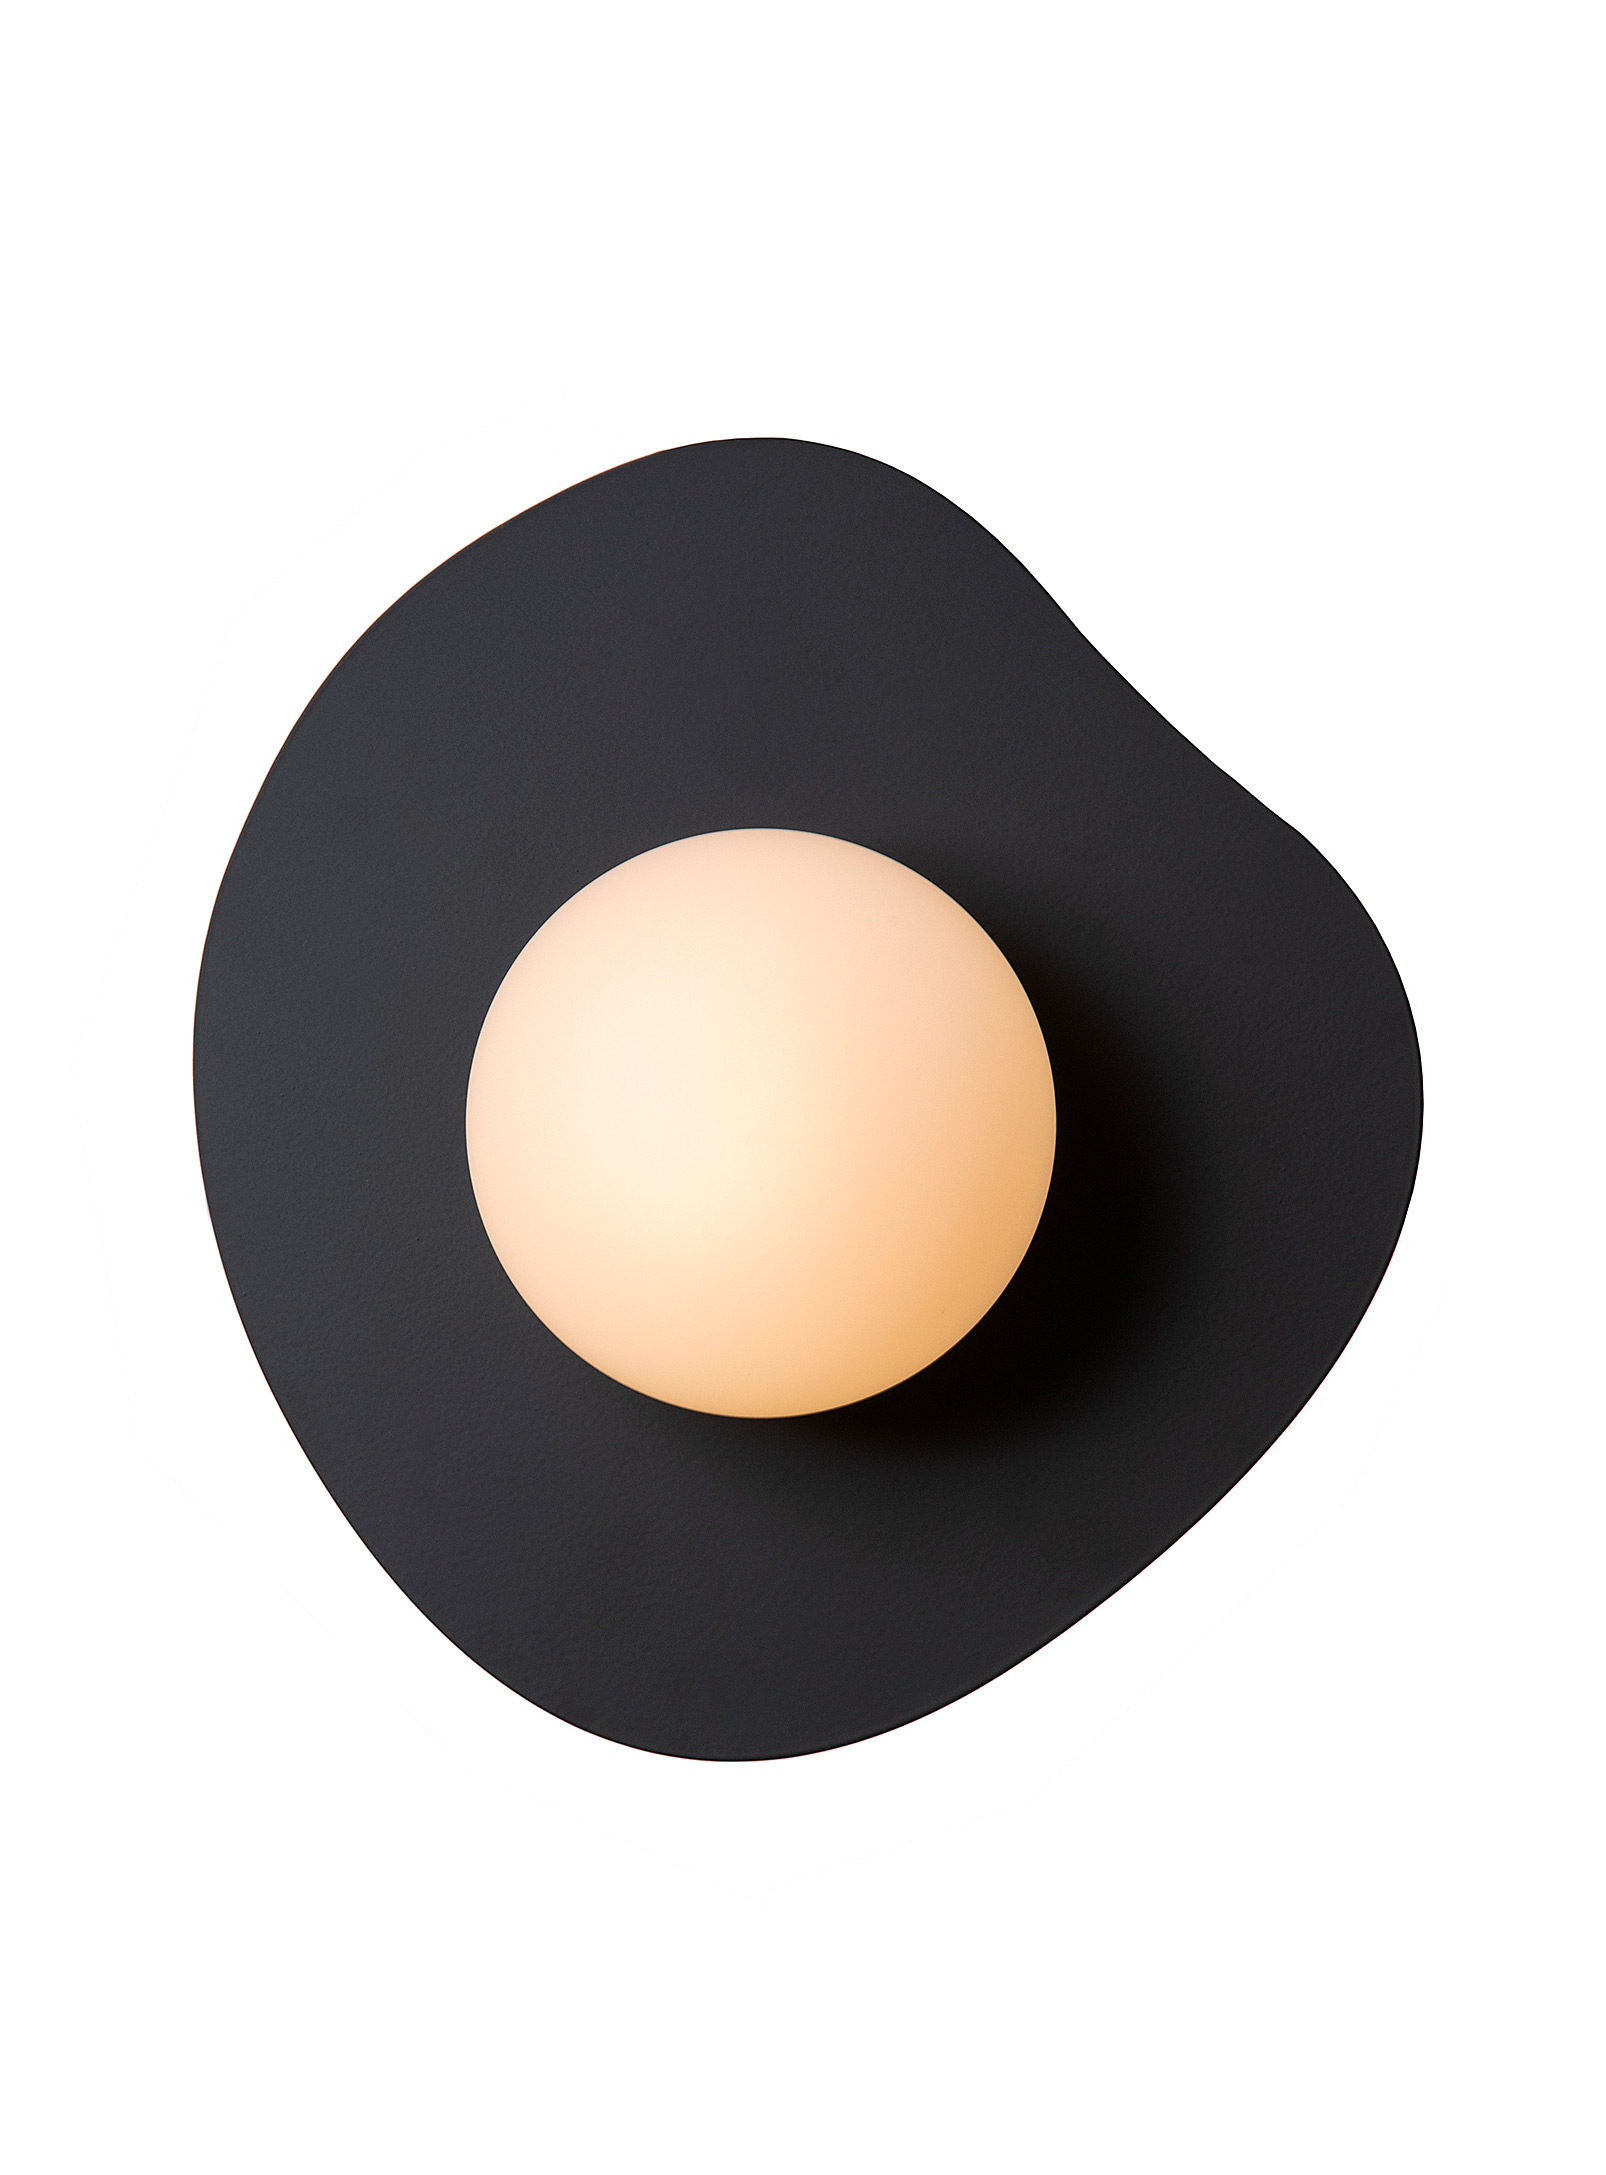 Luminaire Authentik Nopal Asymmetrical Light Fixture In Black